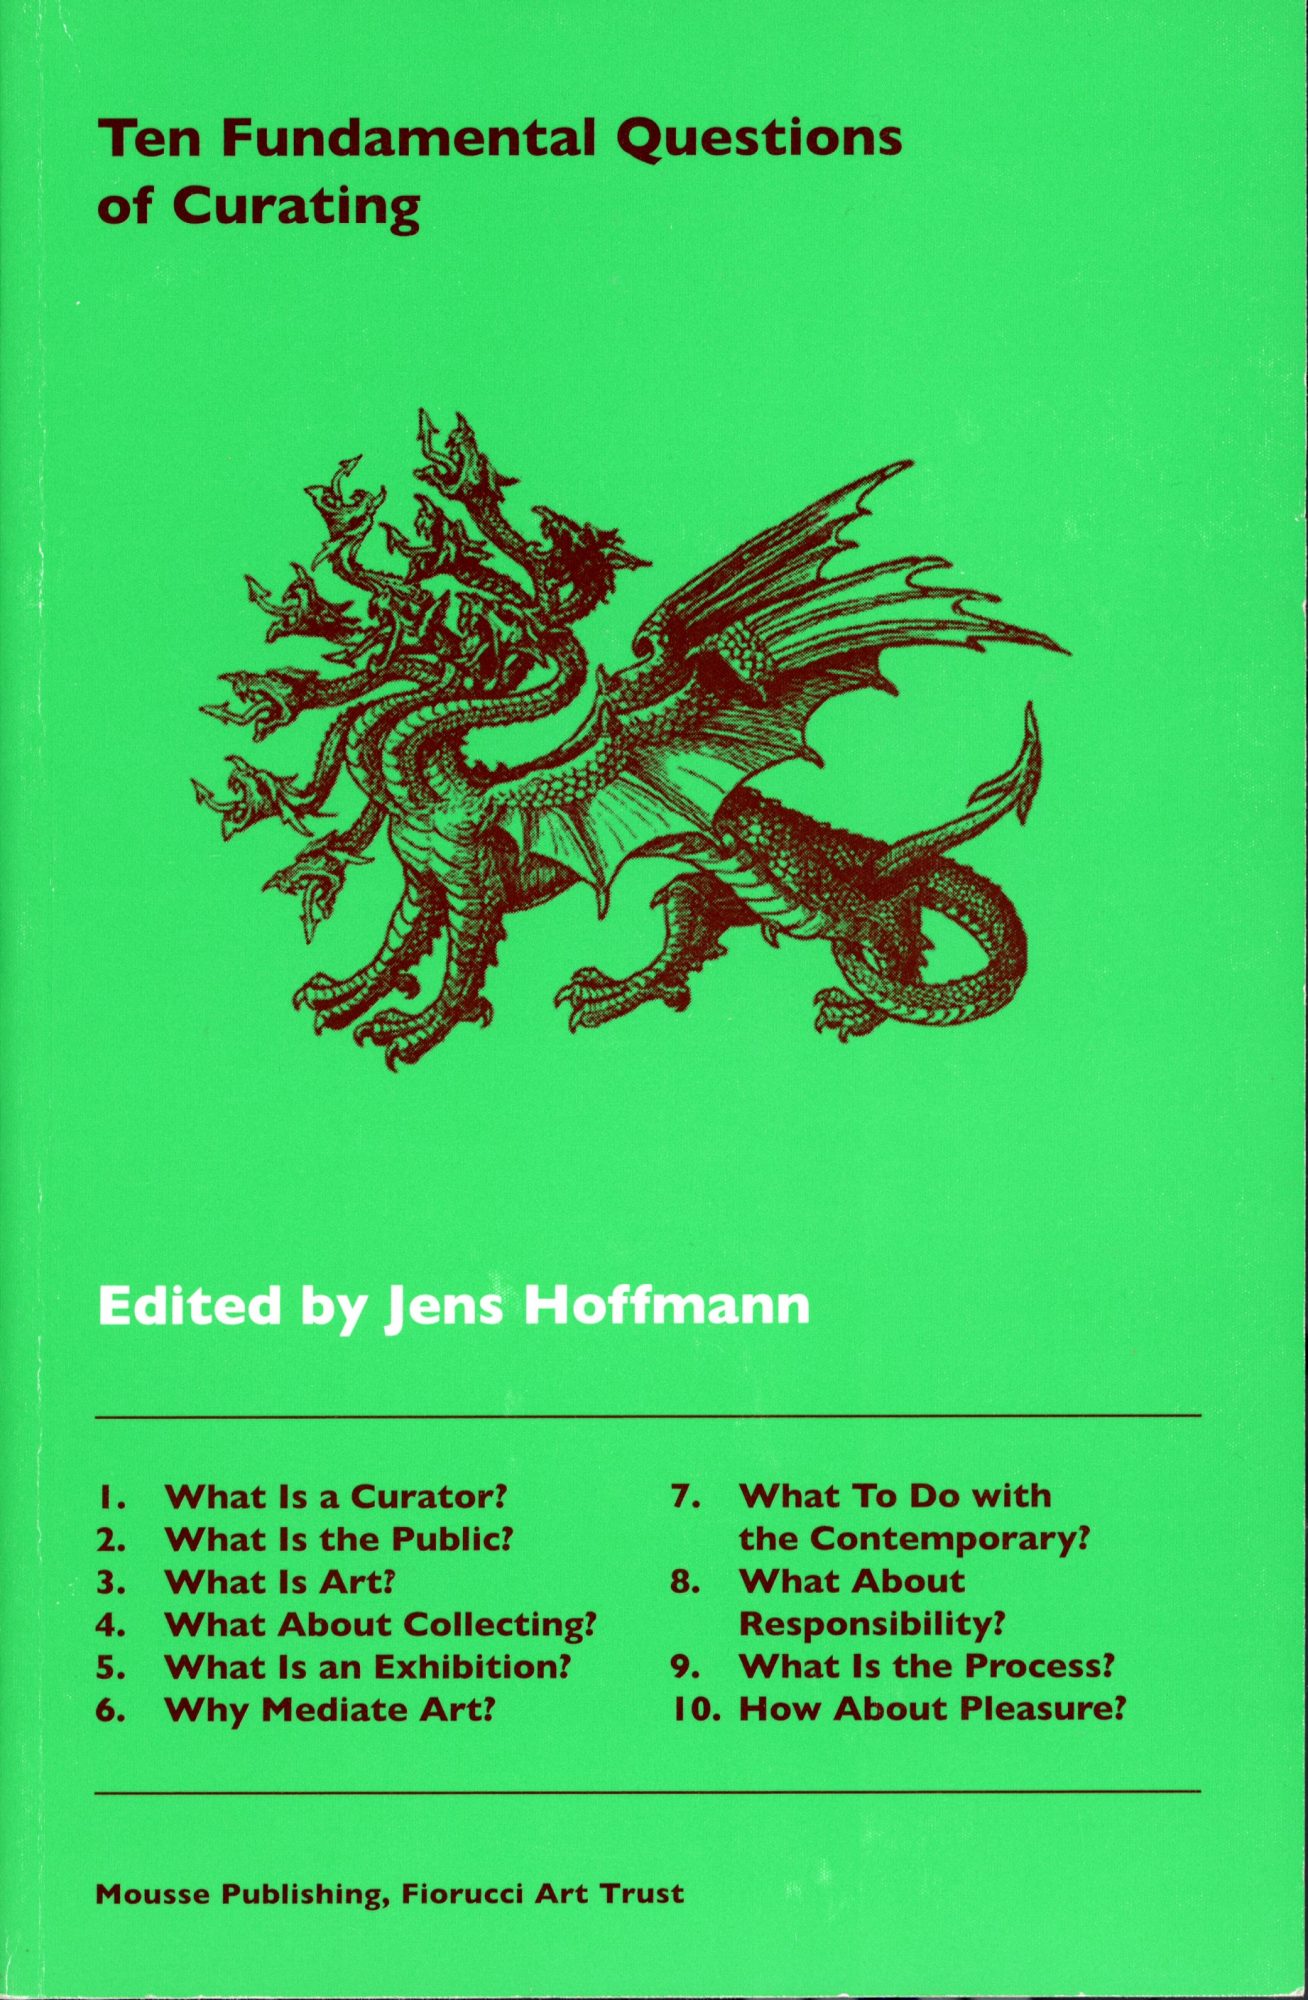 Ten Fundamentals of Curating, Jens Hoffman